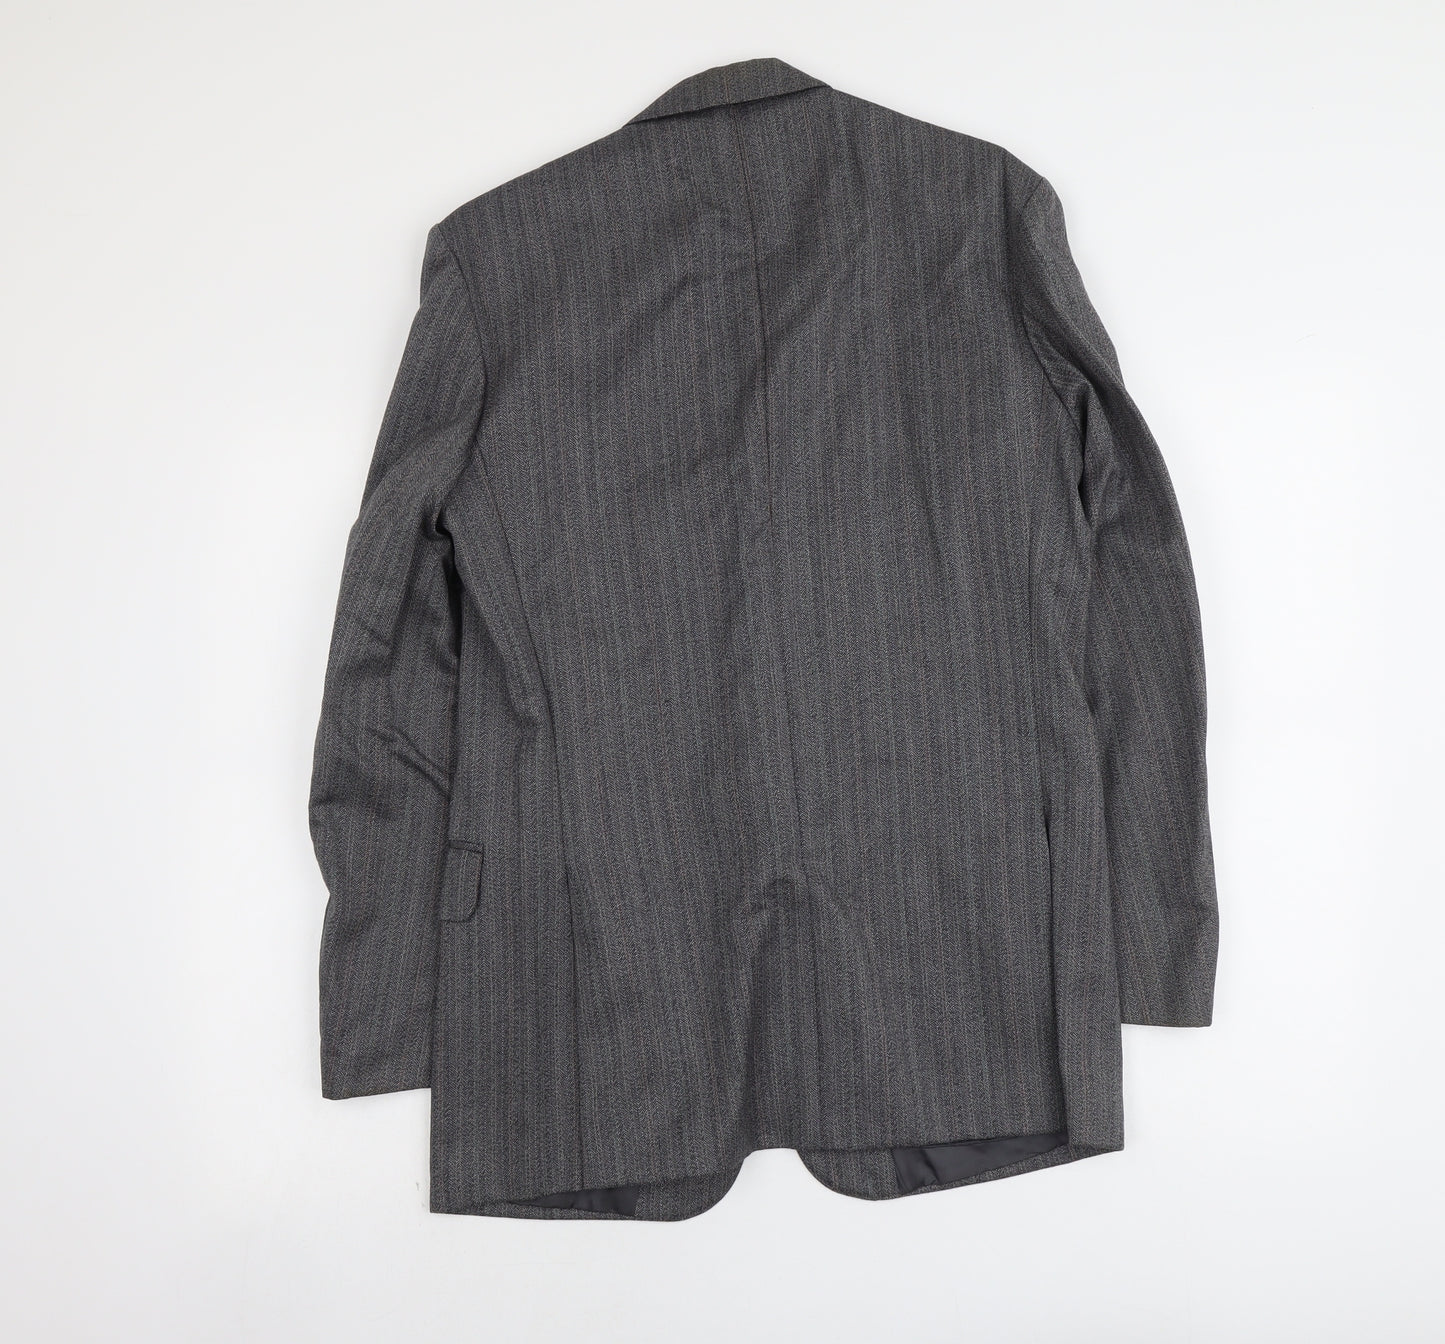 James Barry Mens Grey Striped Wool Jacket Suit Jacket Size M Regular